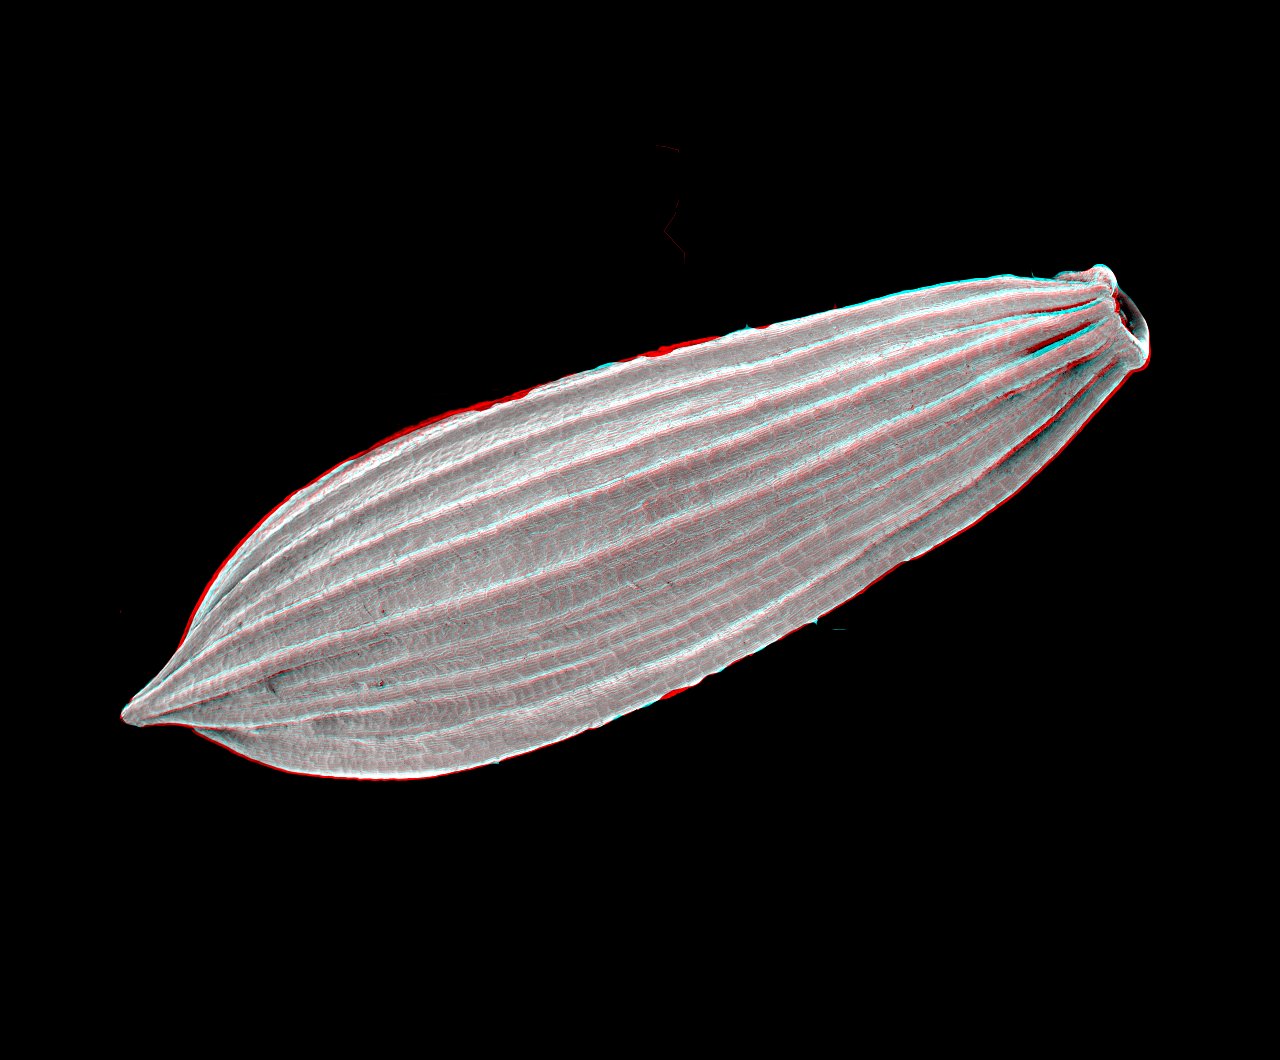 SEM stereo image of lettuce seed (Lactuca sativa)